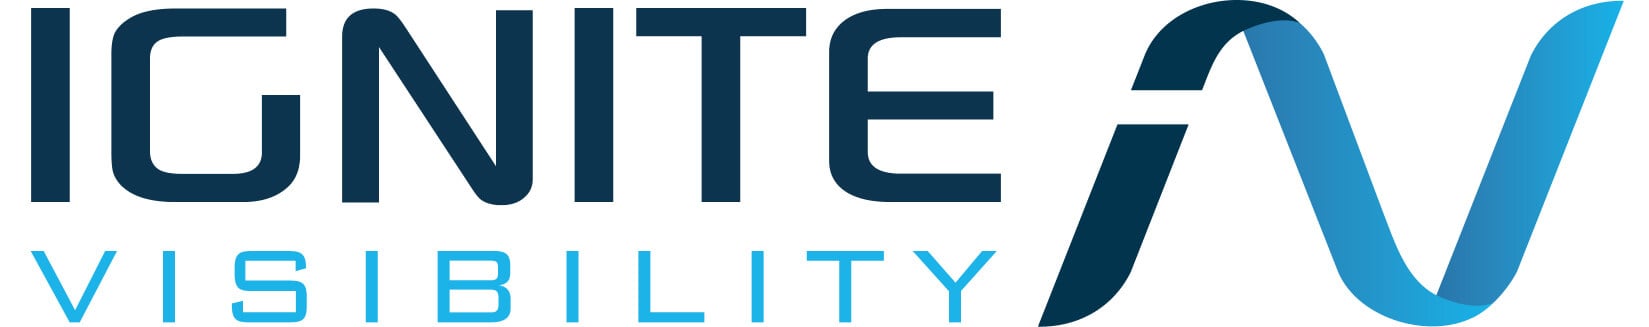 Best Restaurant SEO Company Logo: Ignite Visibility